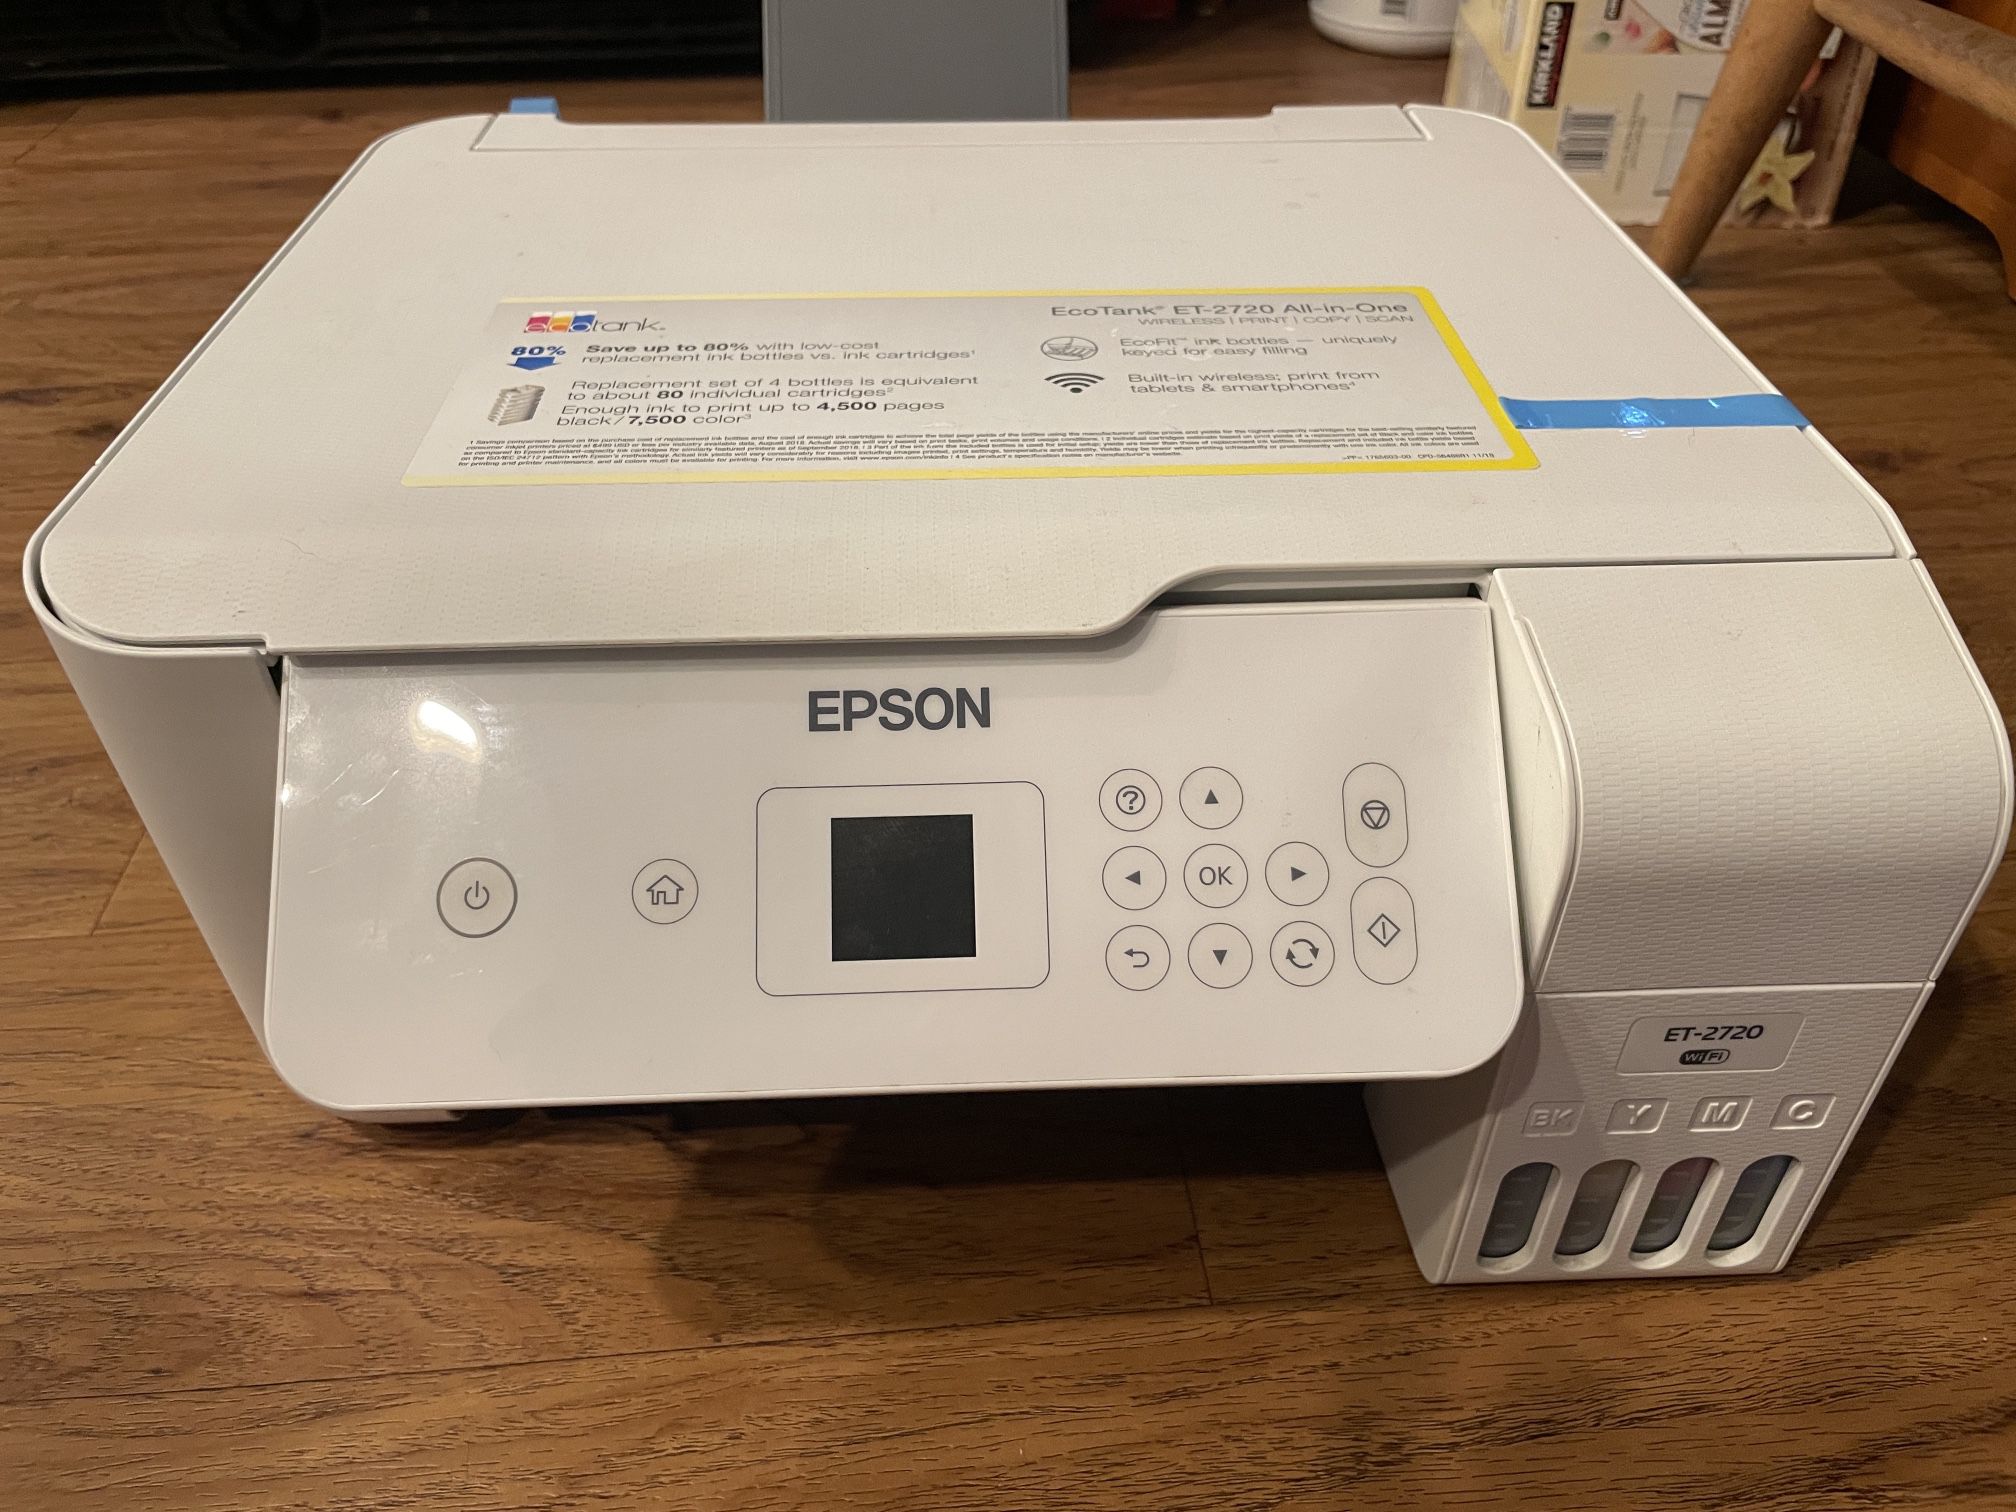 Epson 2720 Normal Used Printer